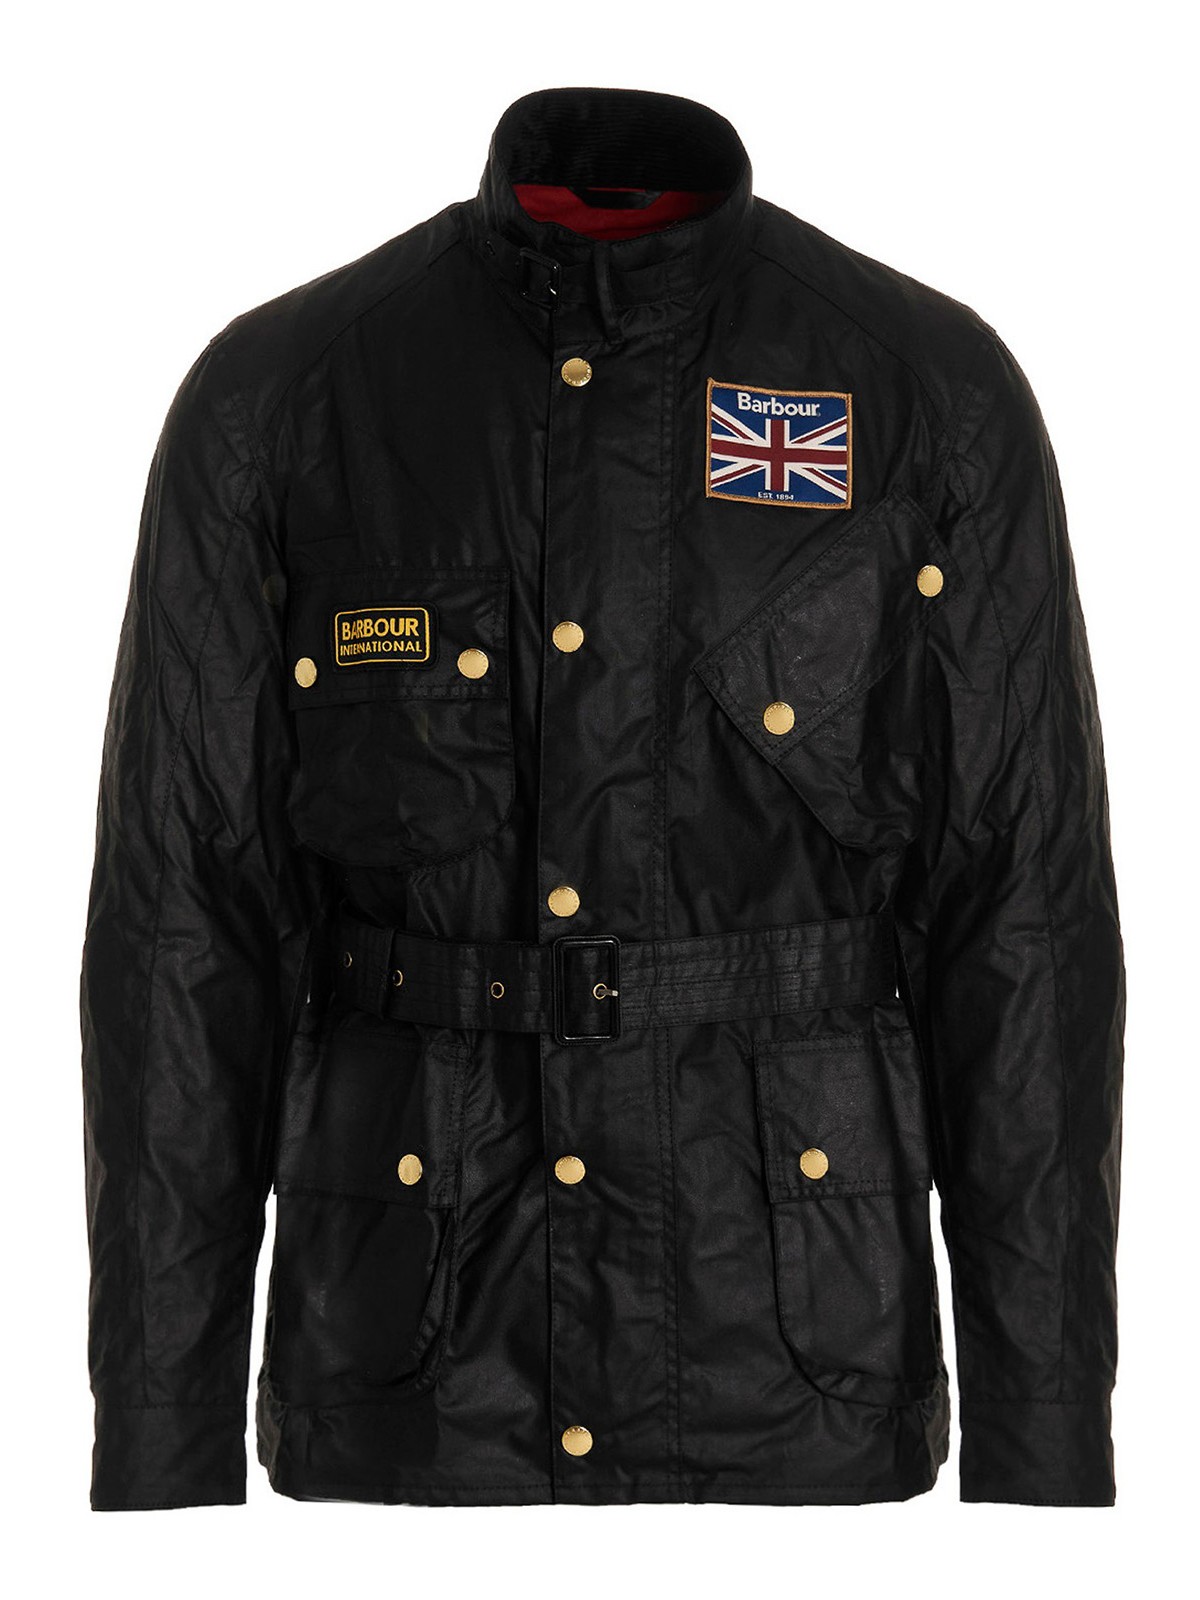 Casual jackets Barbour - B.cial union jack jacket - MWX0068BK91